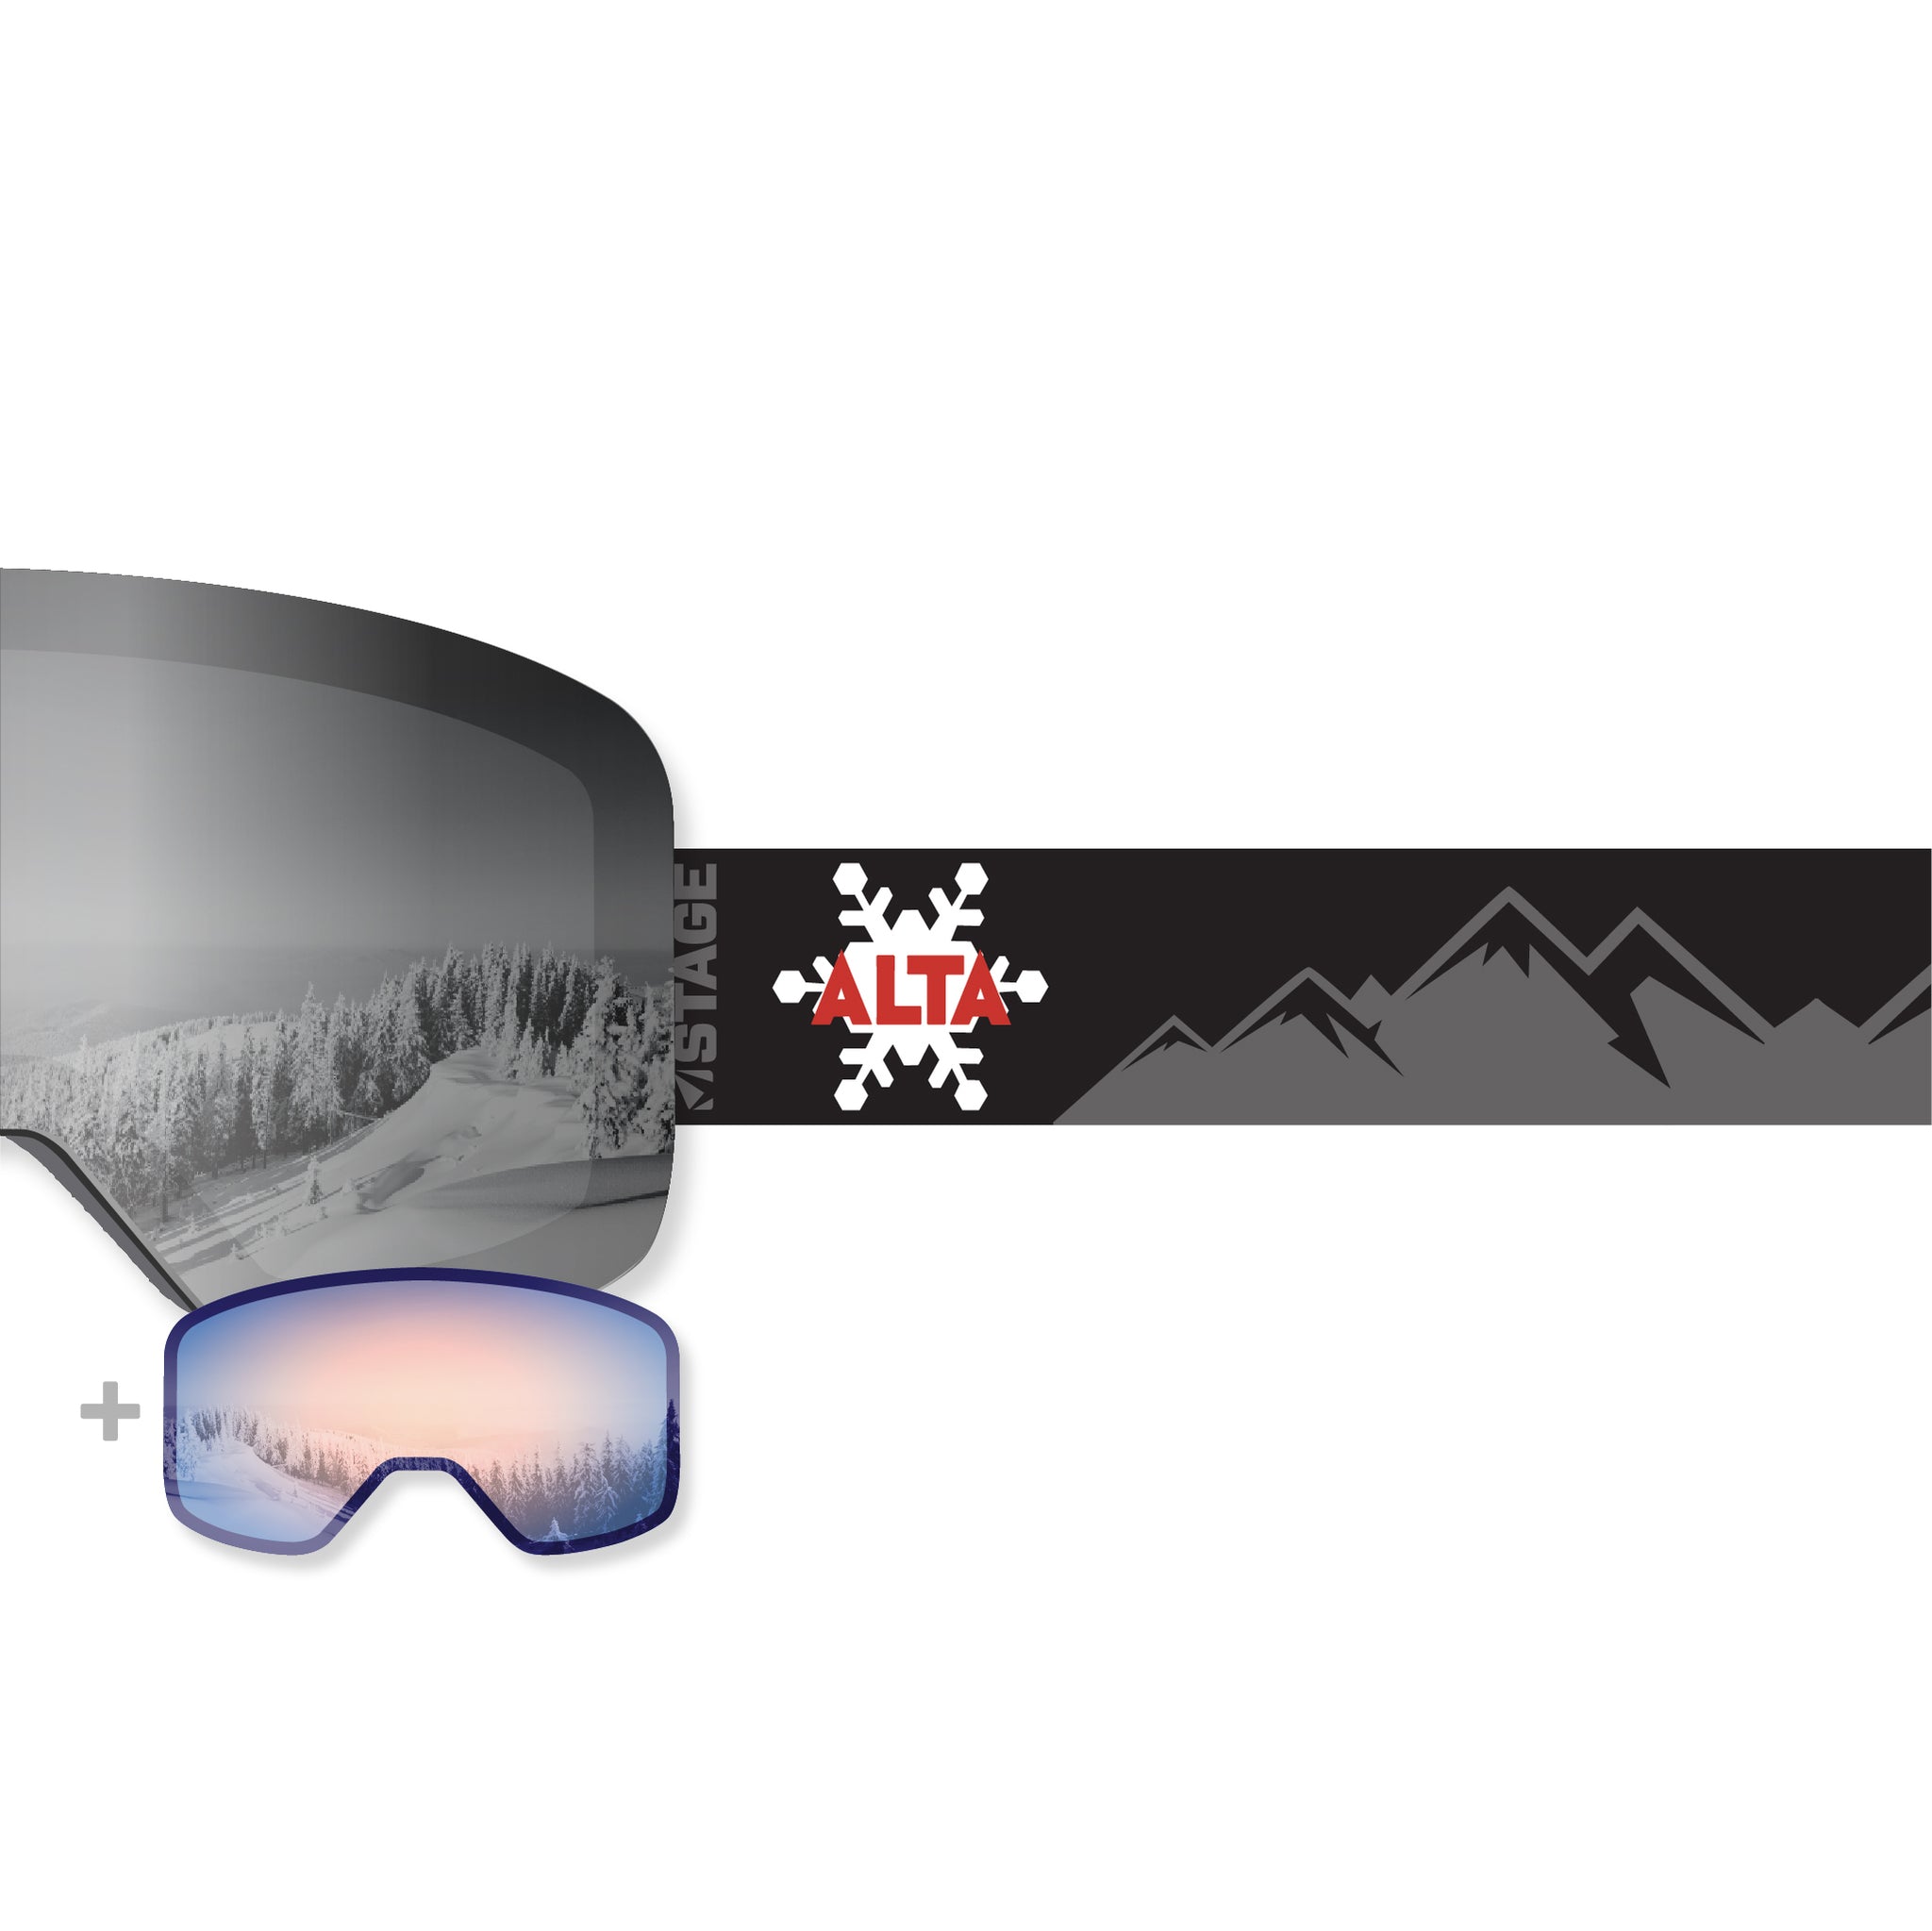 ALTA Propnetic Ski Goggle - Alta Mountains Strap